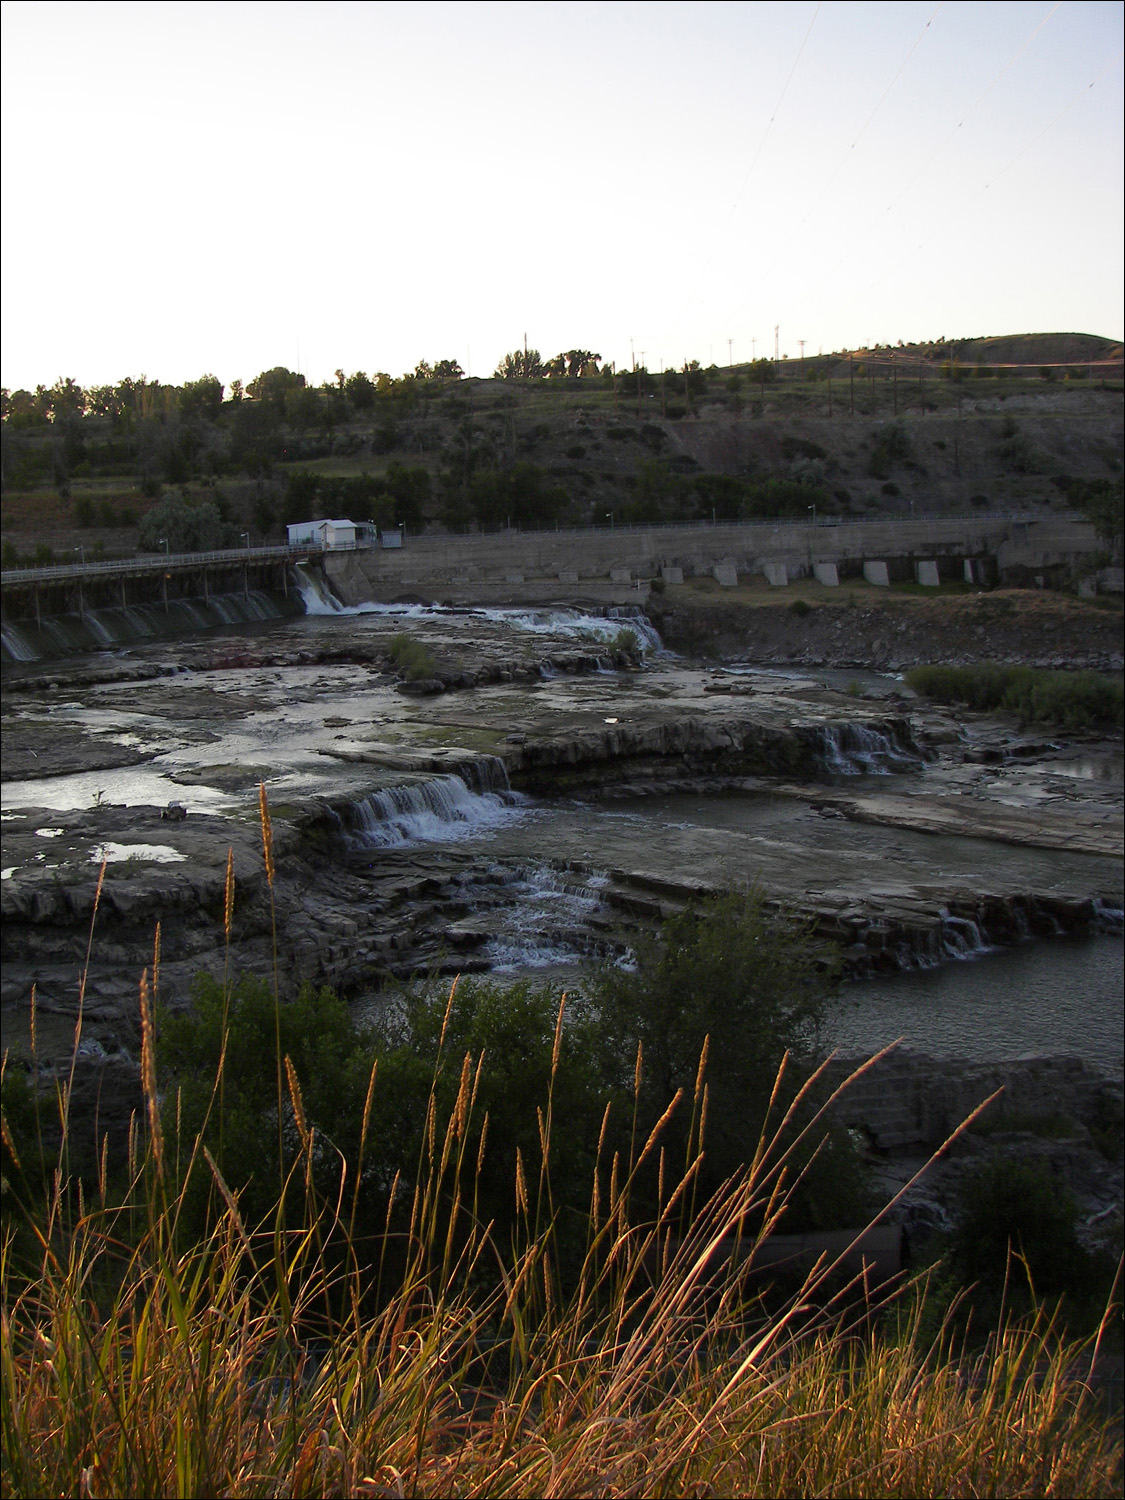 Great Falls, MT-Black Eagle Dam on the Missouri River